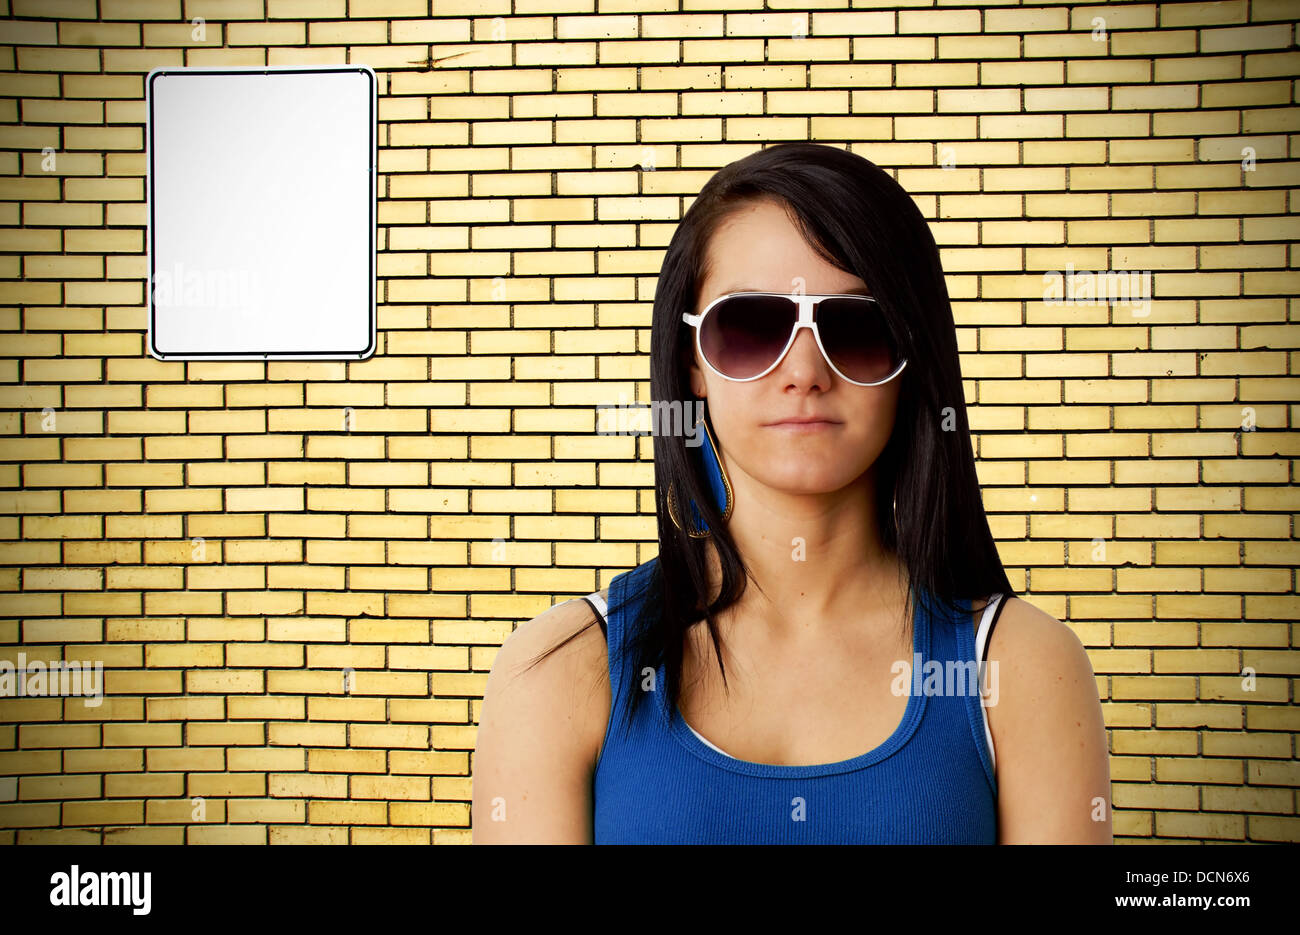 Tough girl and brick wall Stock Photo